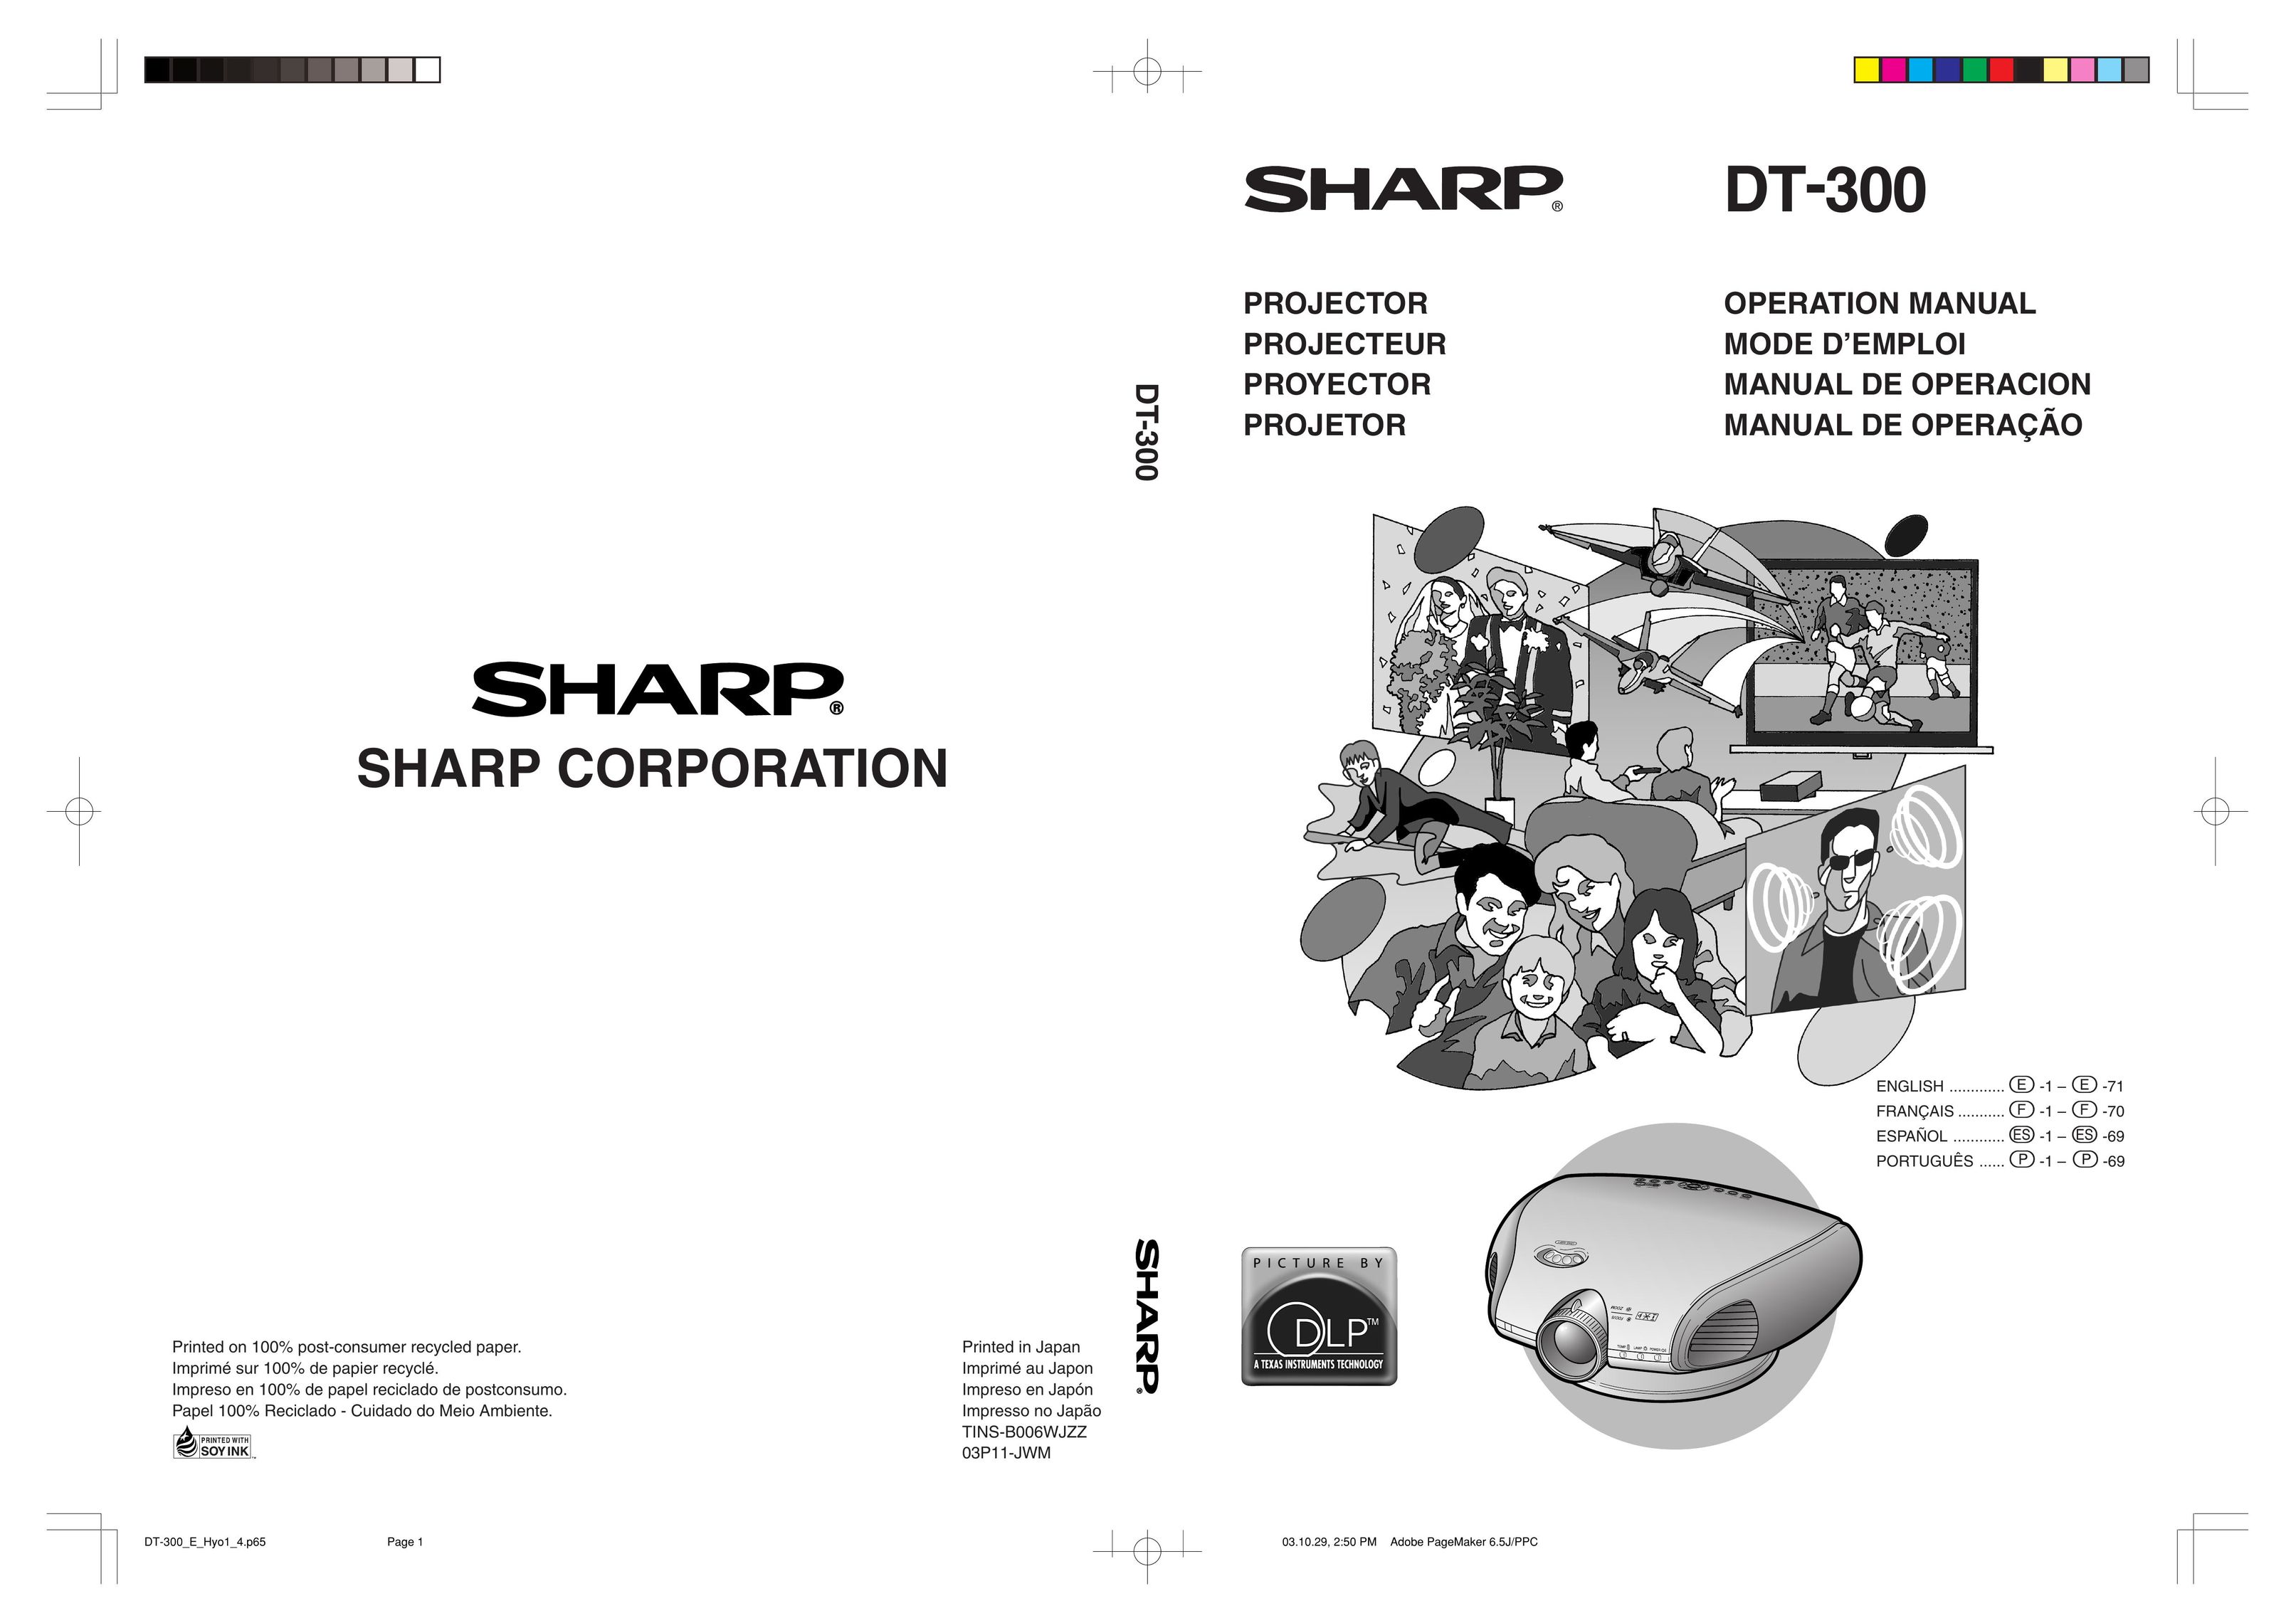 Sharp DT-300 Projector User Manual